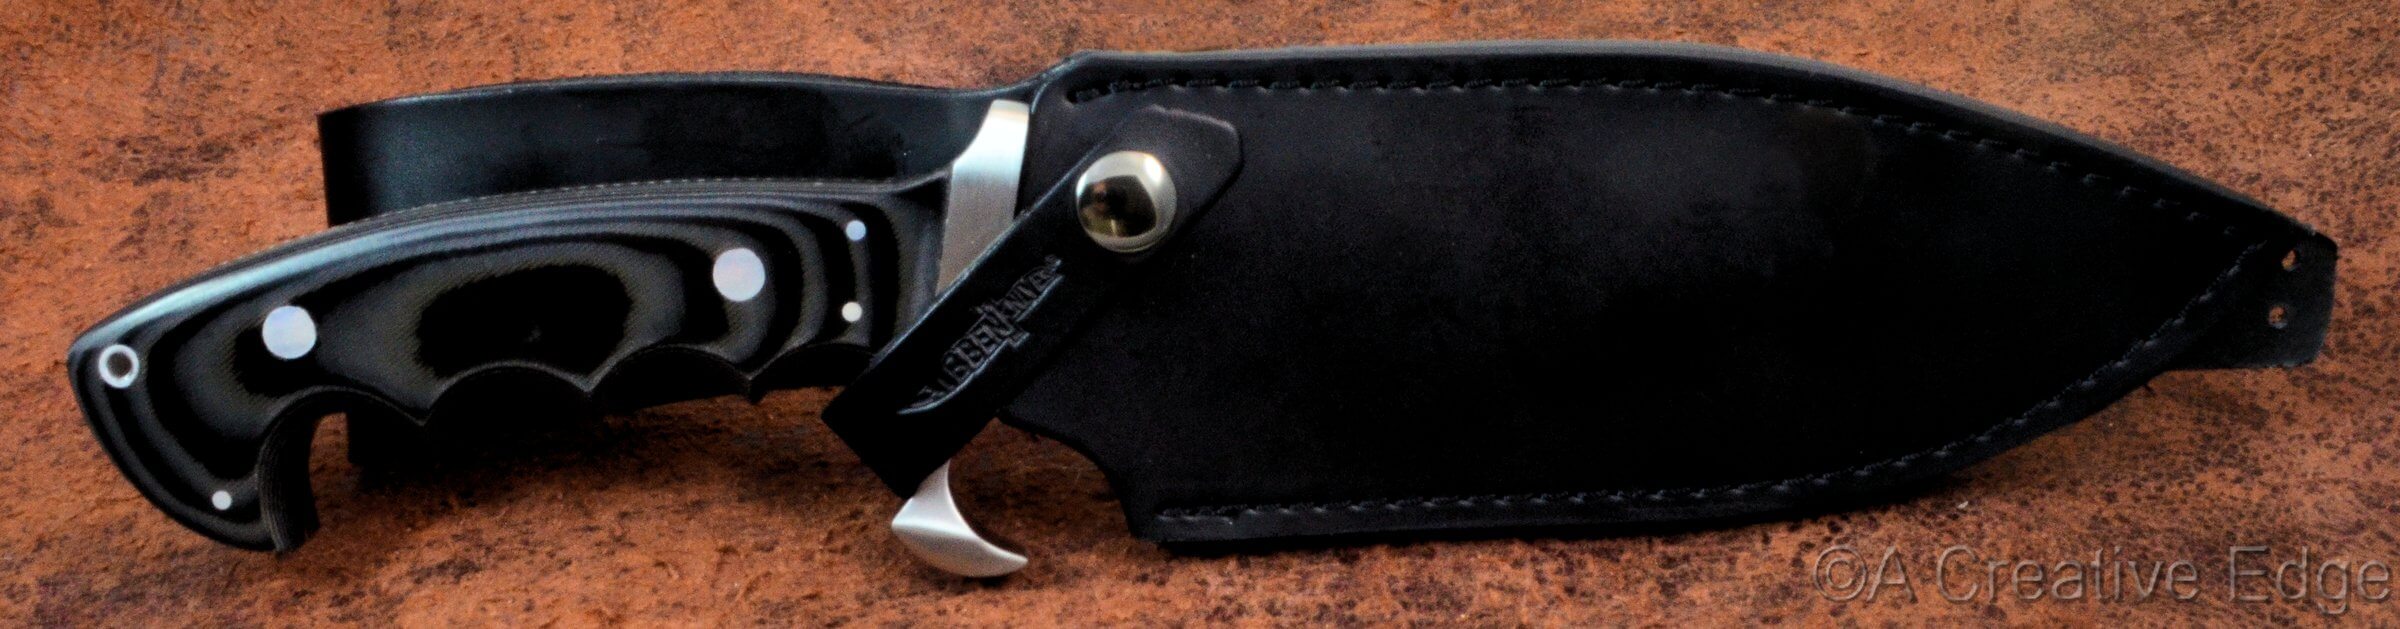 American Flag Folding Pocket Knife600